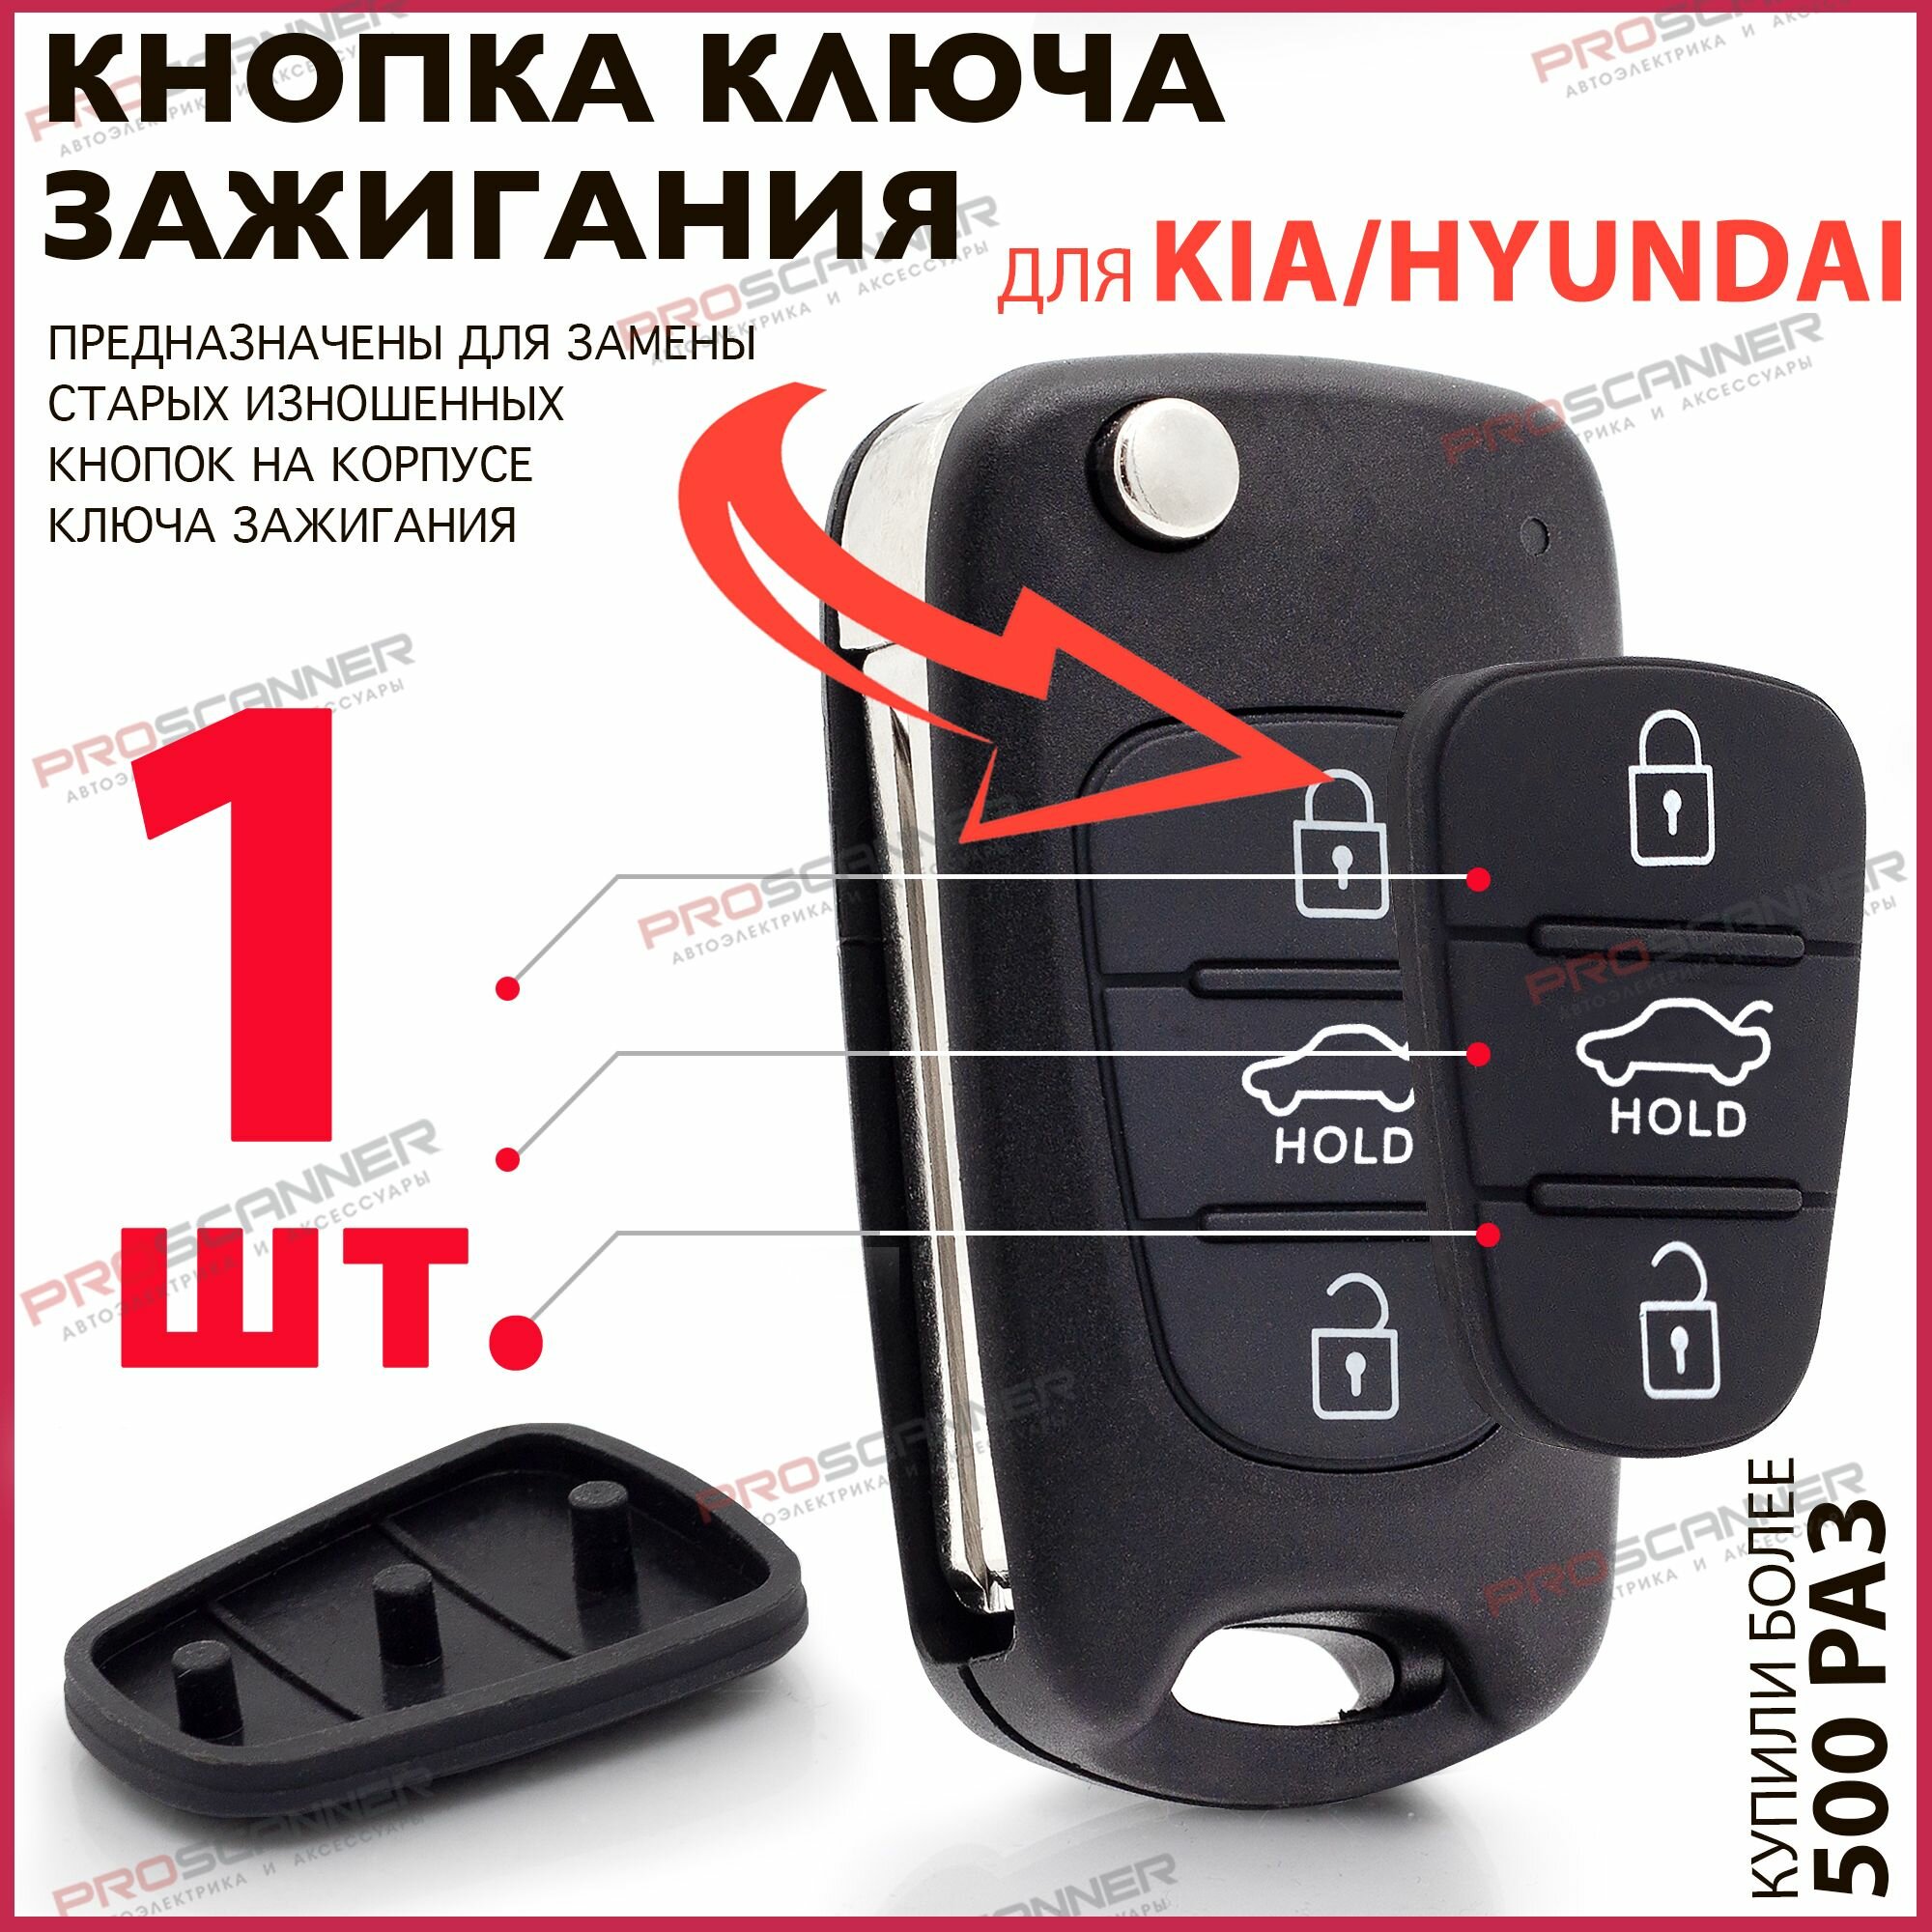 Кнопки ключа зажигания для Hyundai Solaris Elantra Accent Kia Ceed Rio Sportage / Хендай Солярис Элантра Акцент Киа Рио Спортейдж Сид - 1 штука (для 3х кнопочного ключа c Hold)